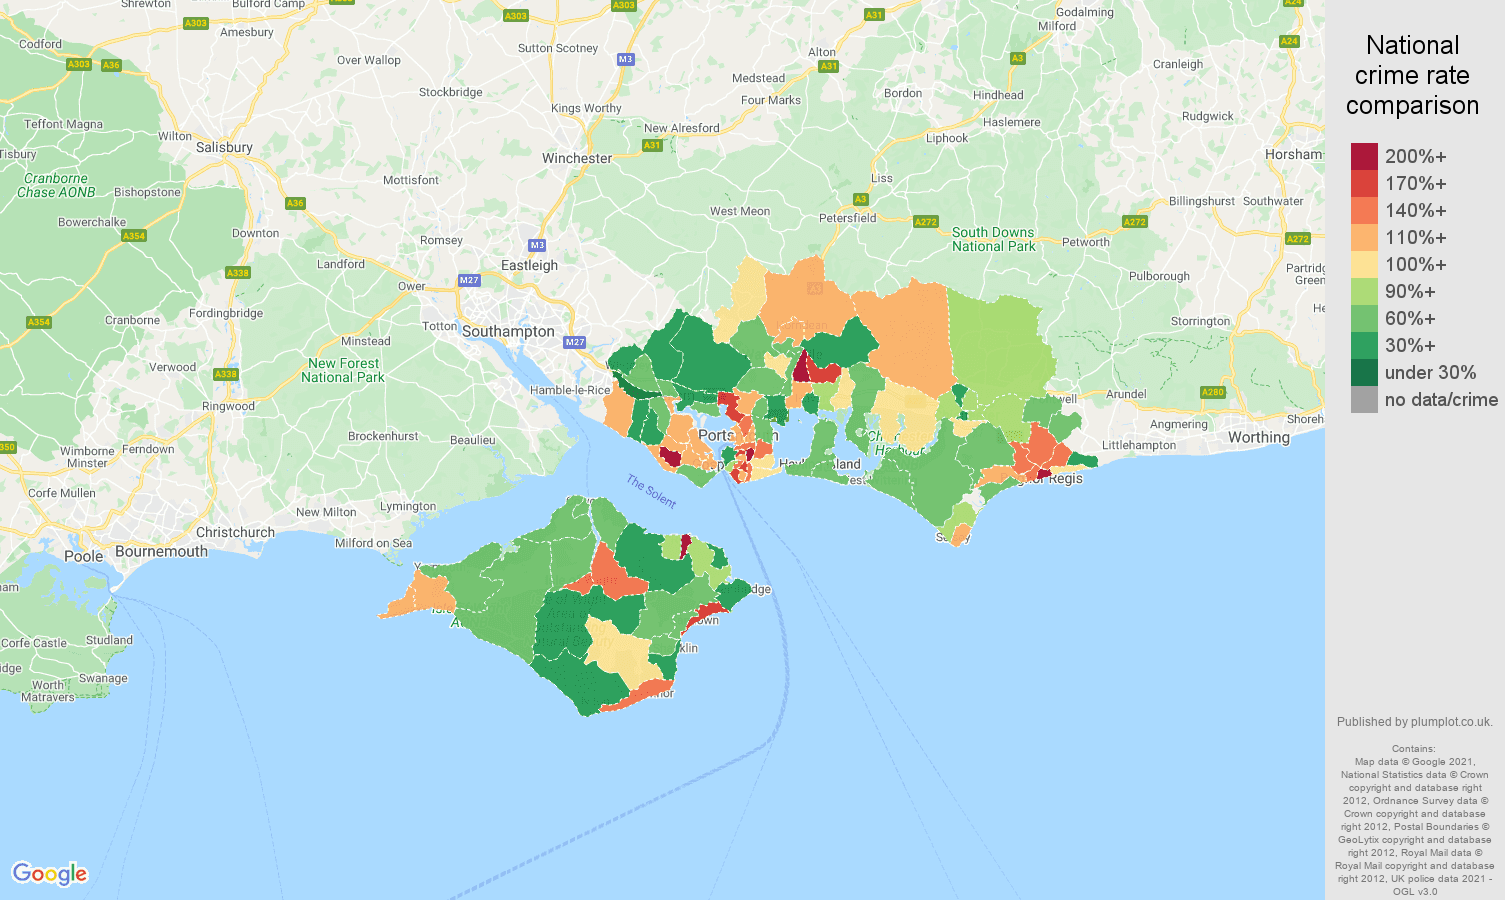 Portsmouth criminal damage and arson crime rate comparison map